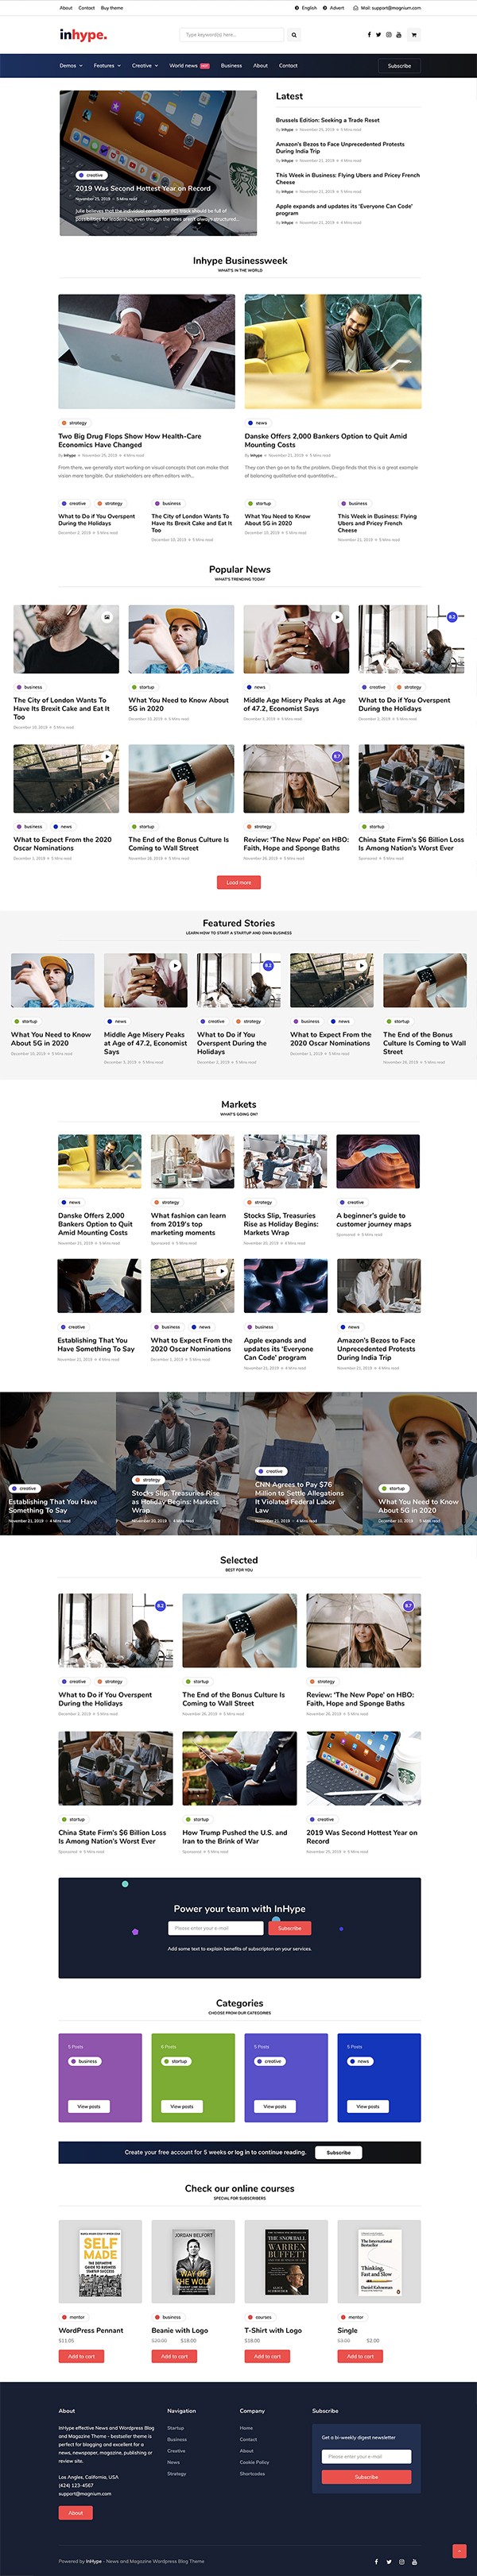 InHype – Blog & Magazine WordPress Theme